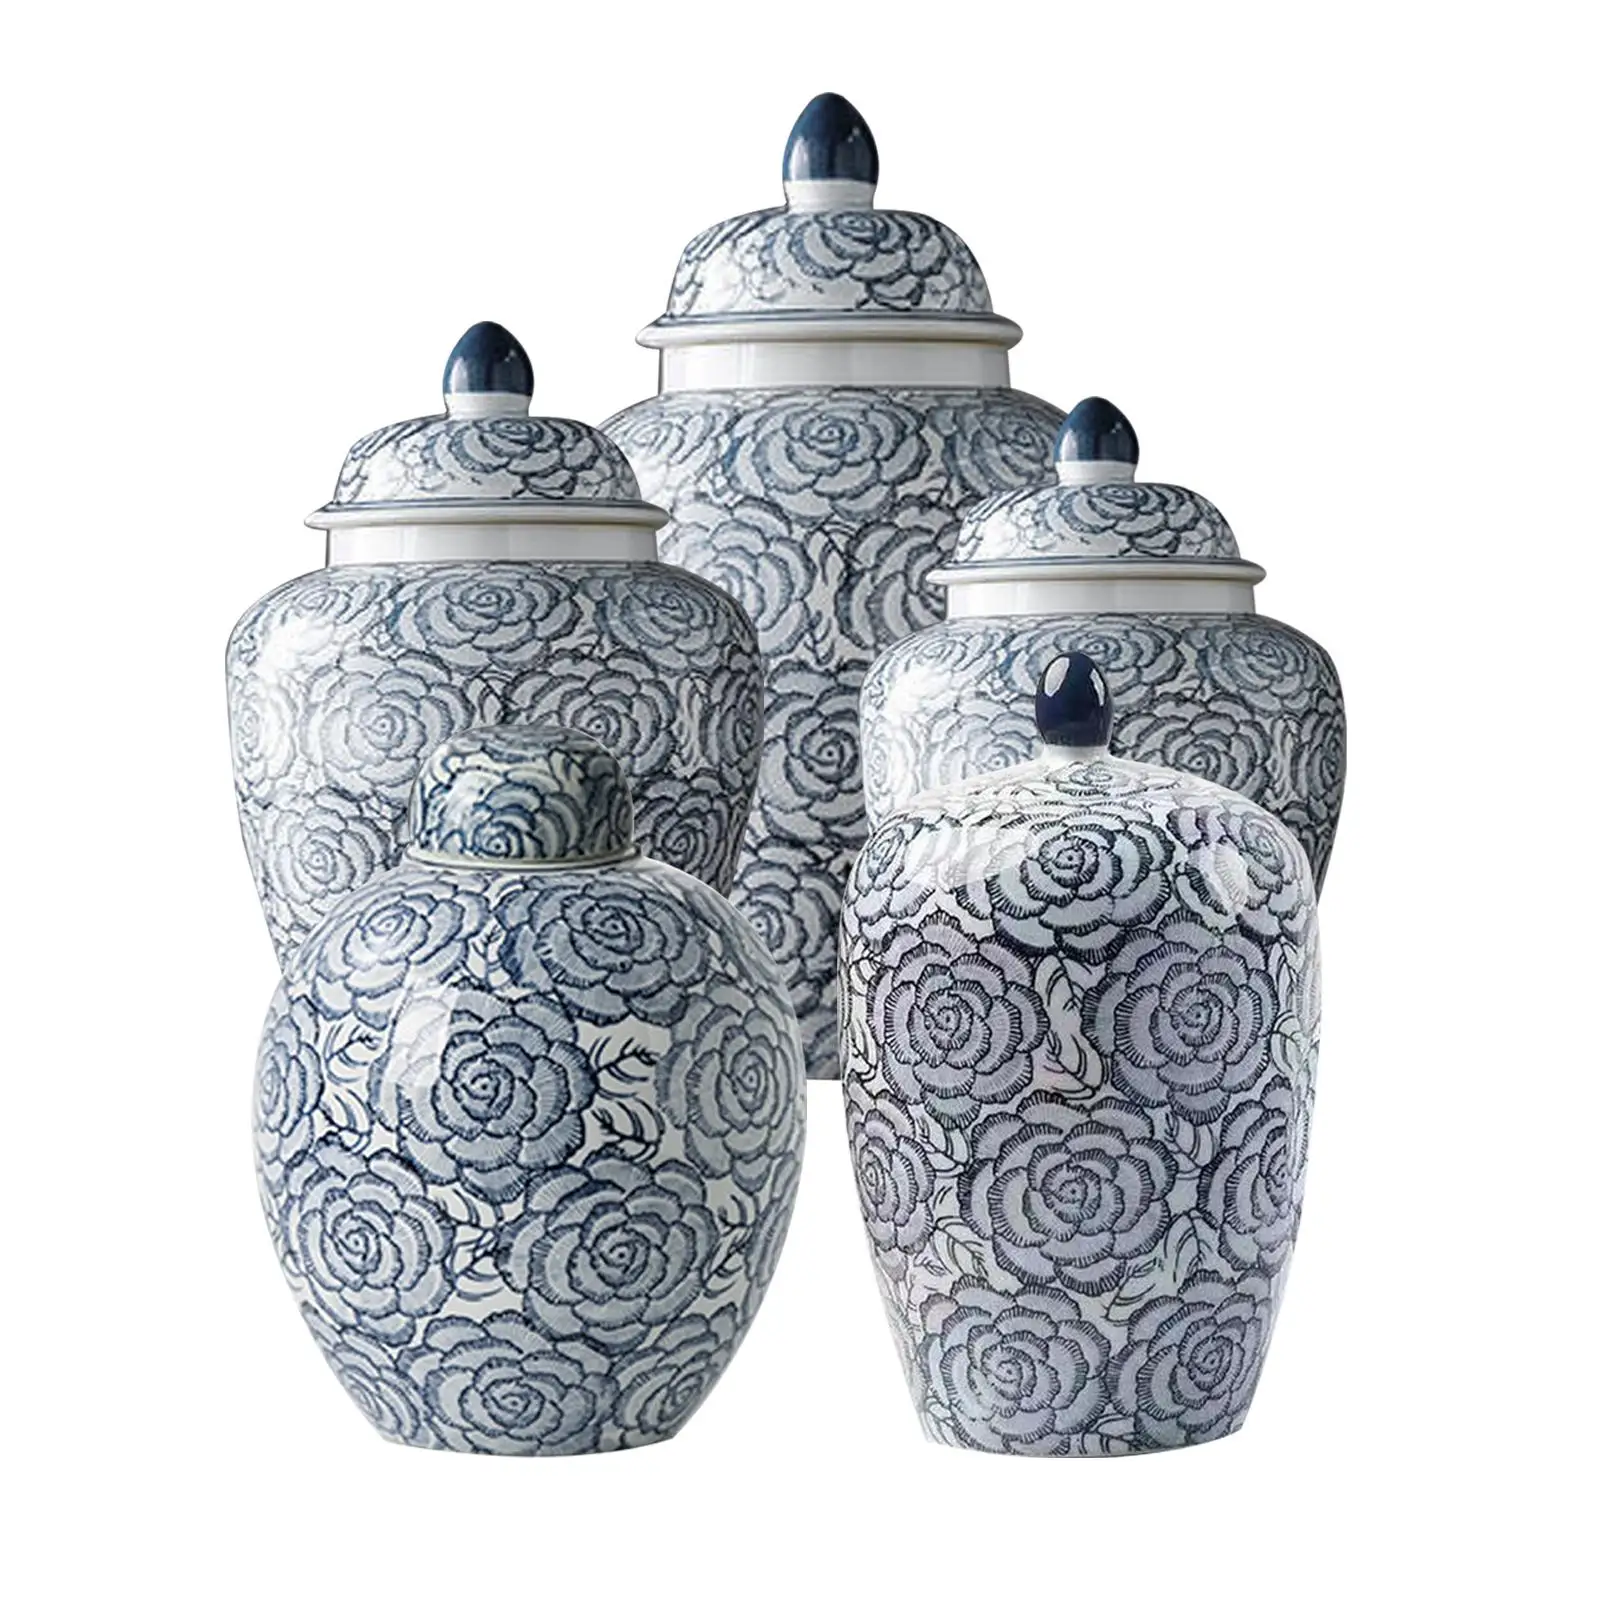 Ceramic Flower Vase Desktop Classical Hand Painted Glazed Floral Arrangement Pot